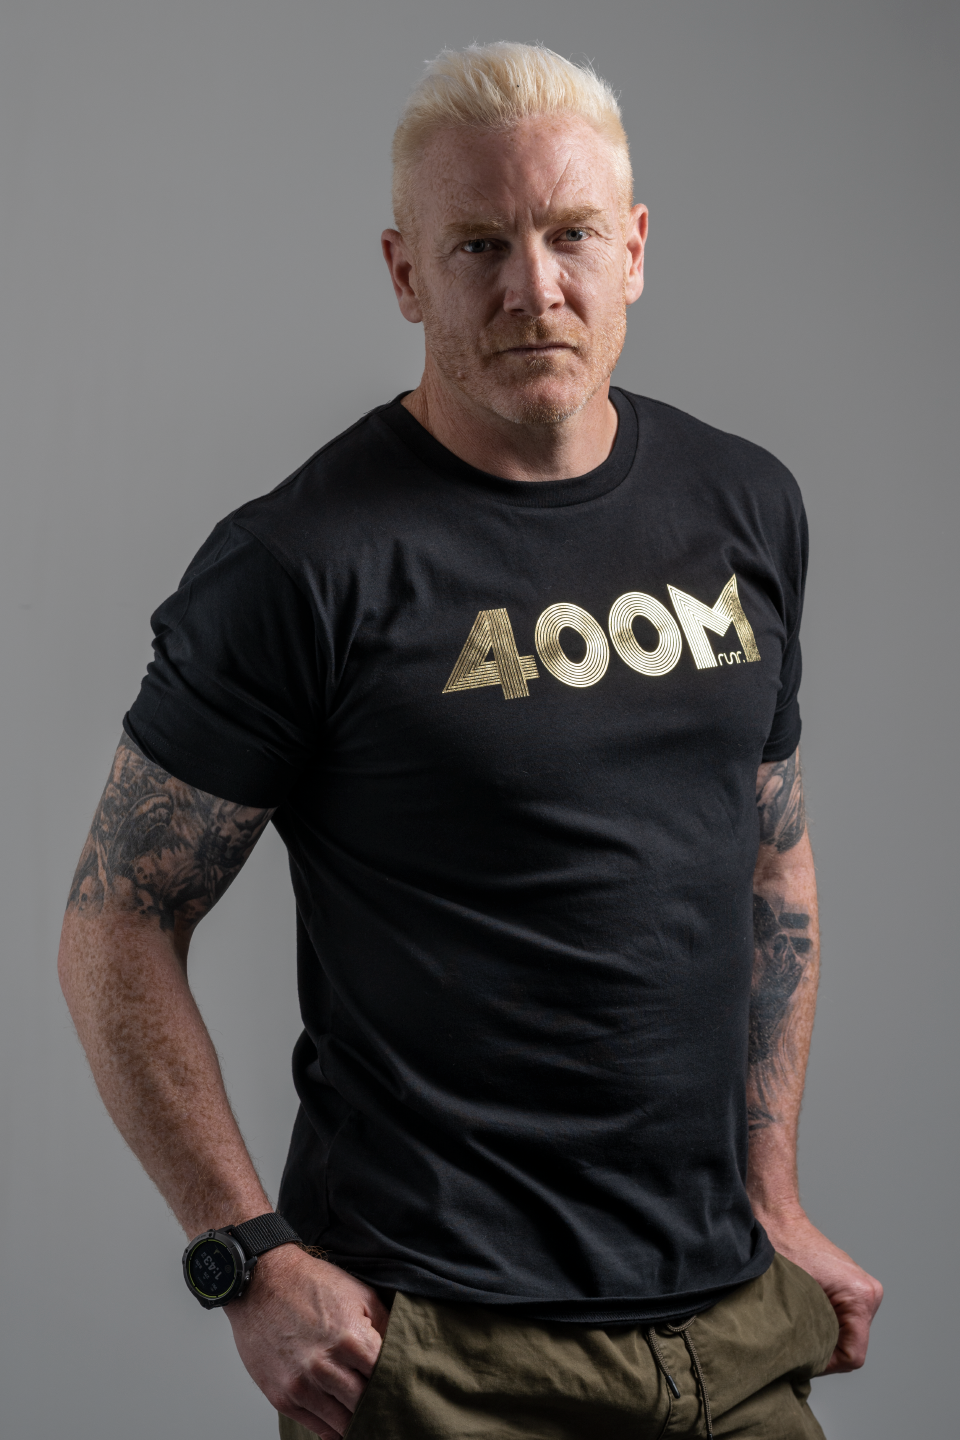 Men's 400M Runr T-Shirt